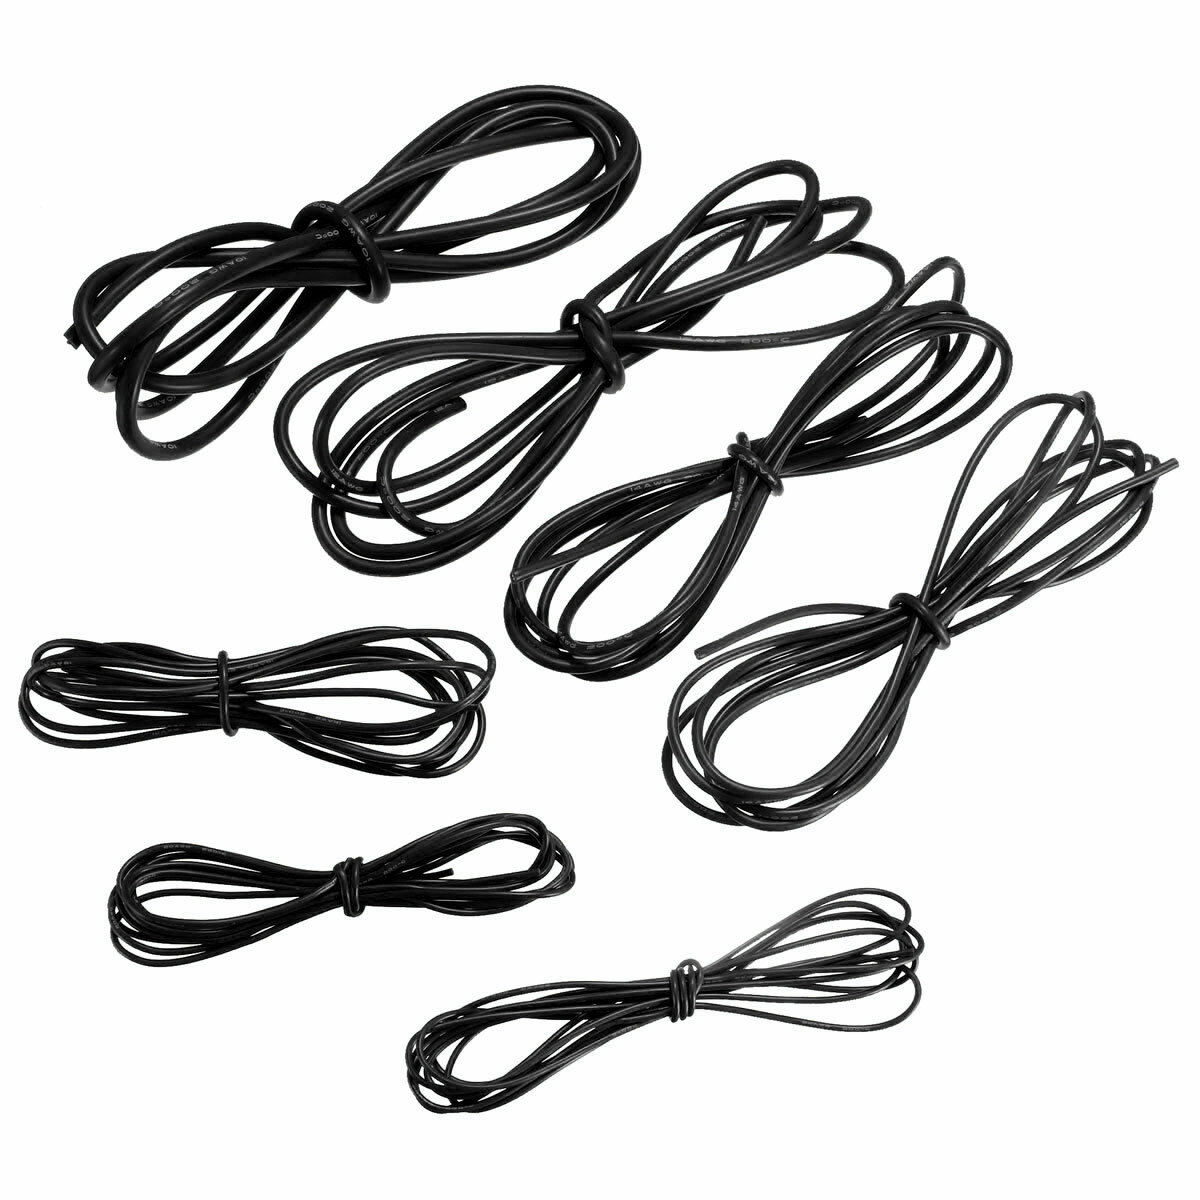 DANIU 2 Meter Zwart Silicon Wire Cable 10/12/14/16/18/20 / 22AWG Flexibele Kabel